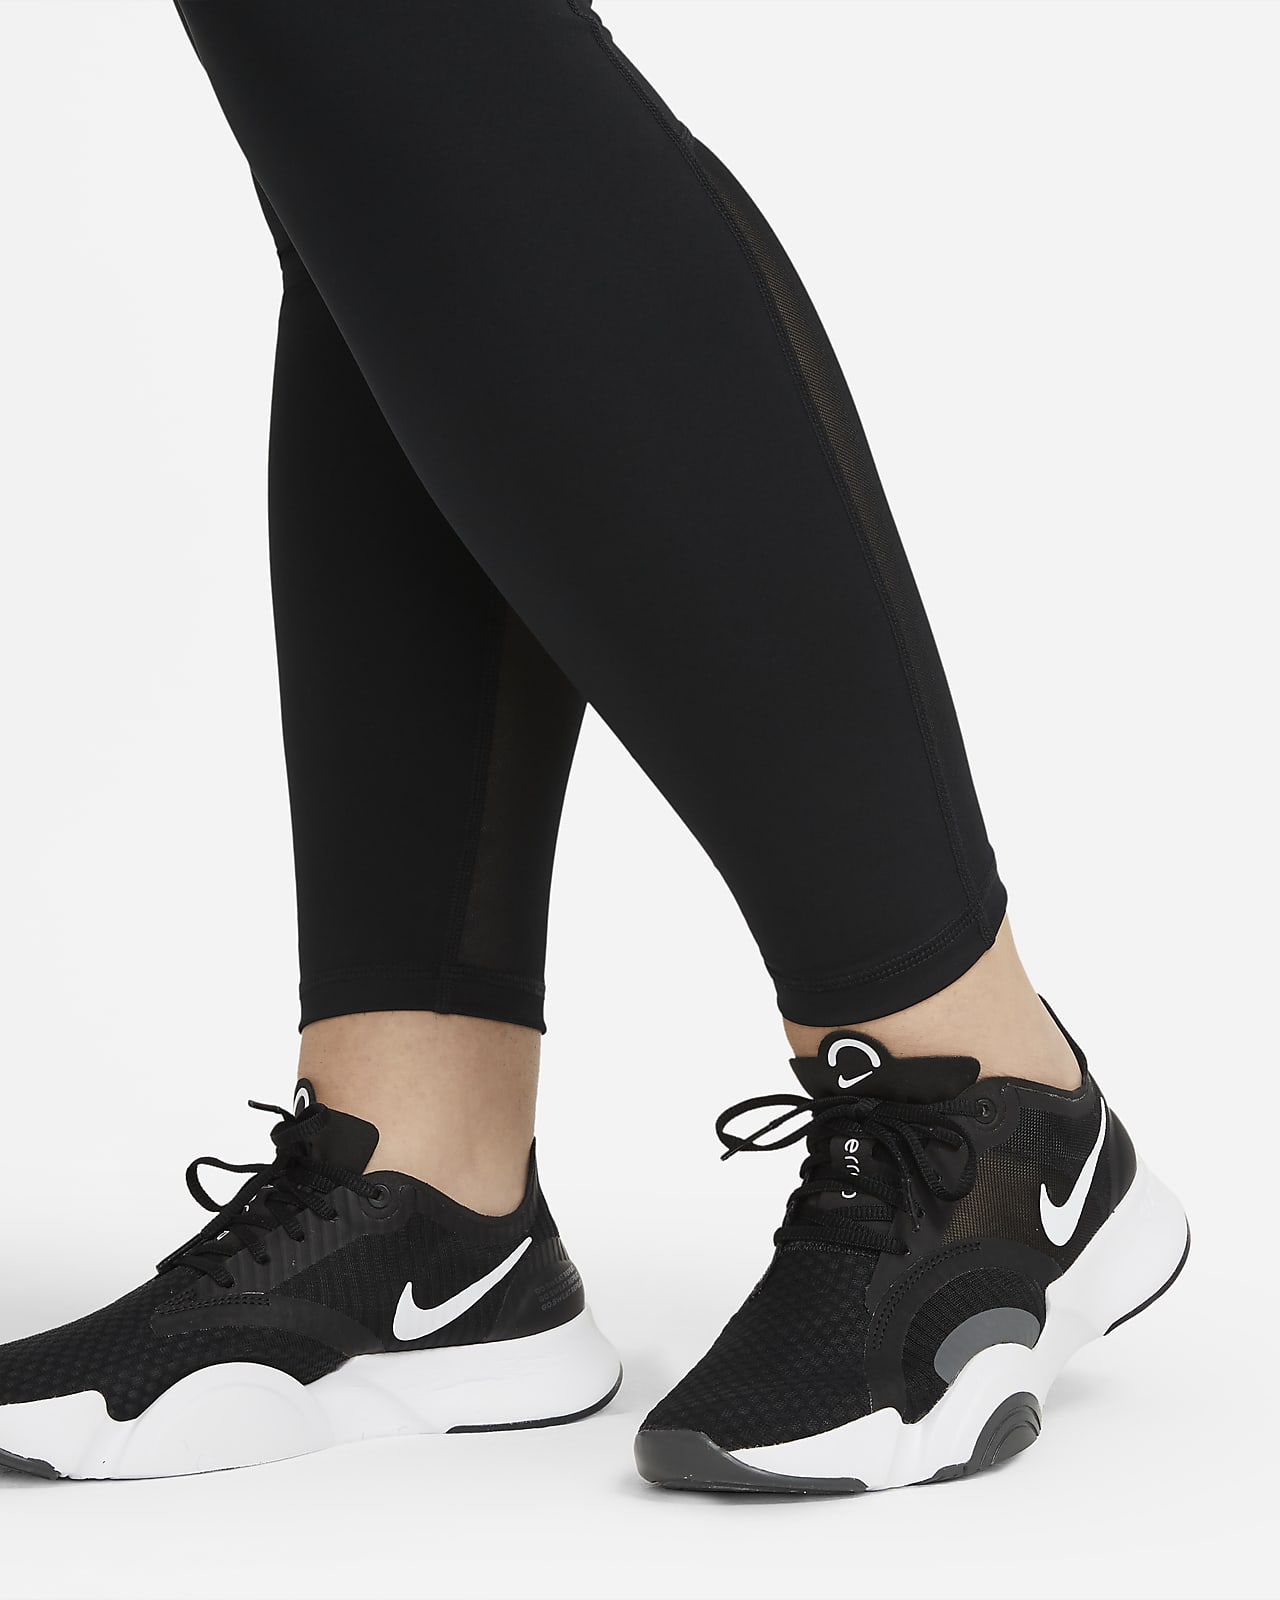 Women's Nike Pro 365 Leggings (Black)